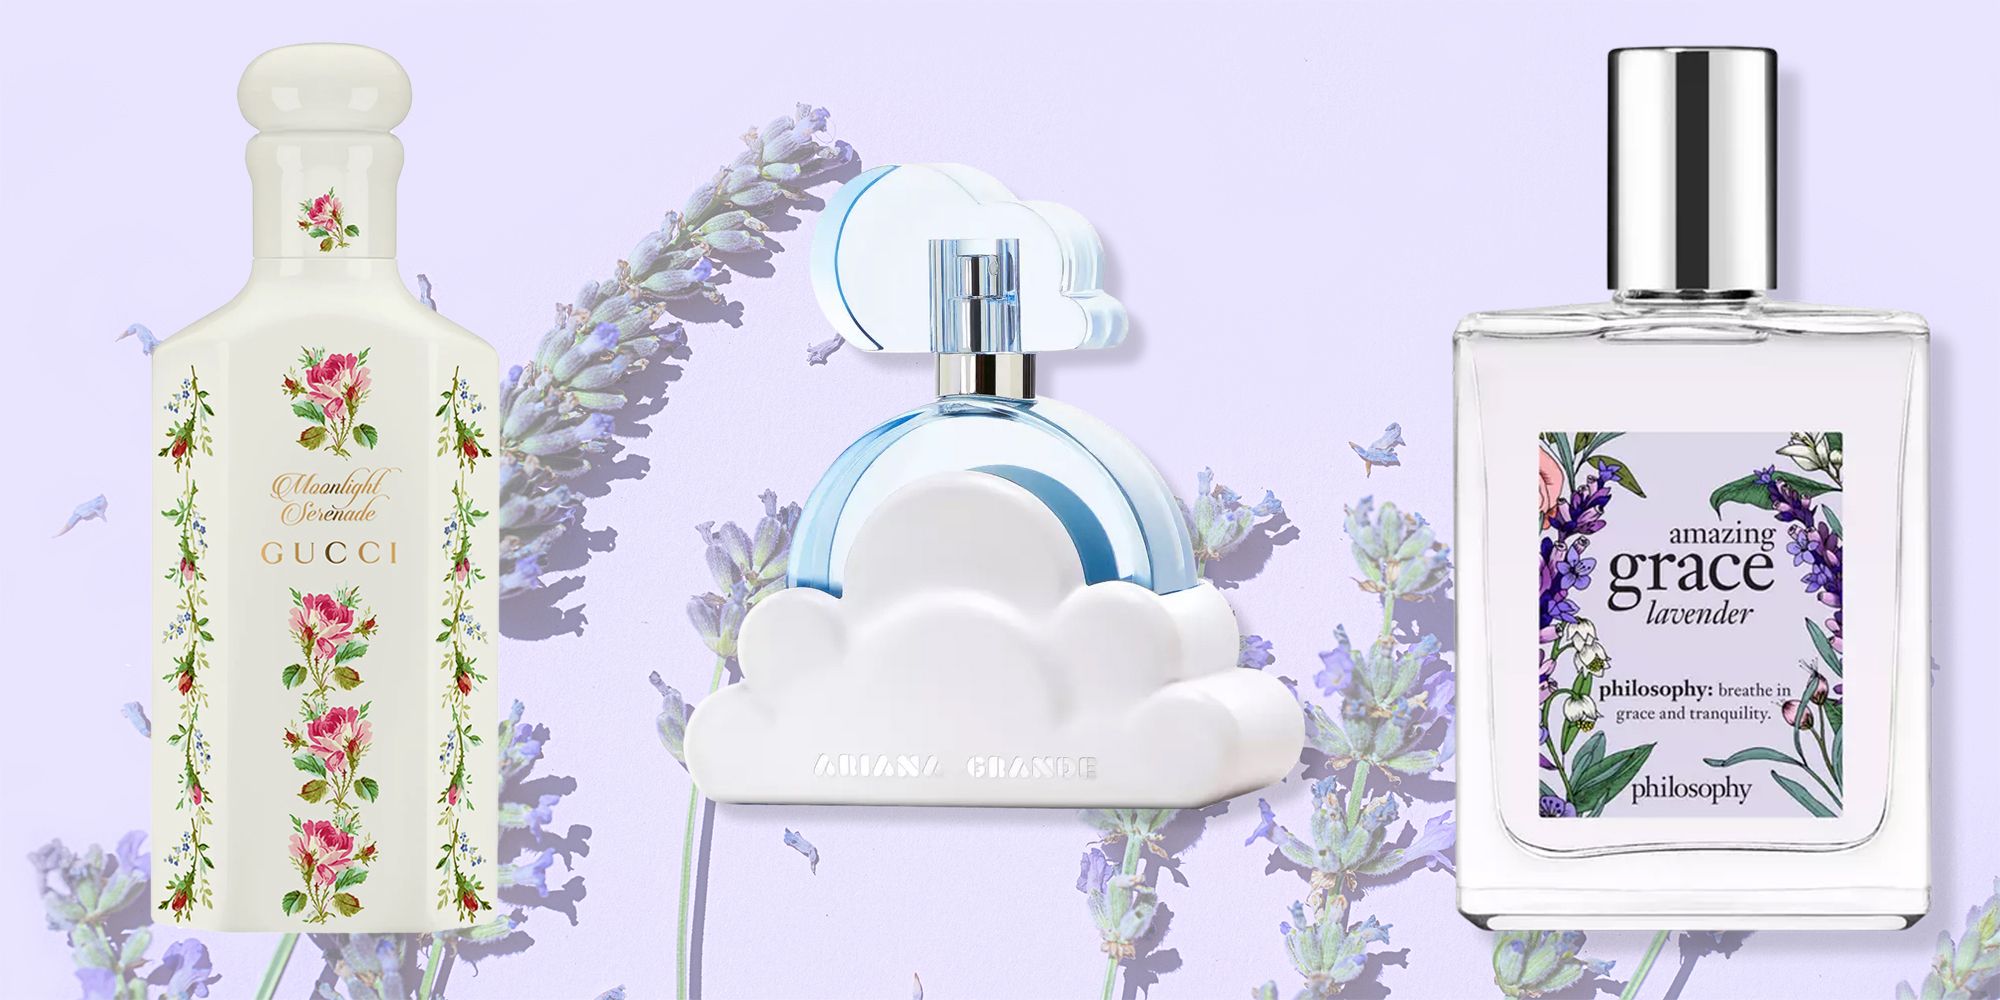 The 10 Best Lavender Perfumes 2023 - Lavender Floral Fragrances To Shop